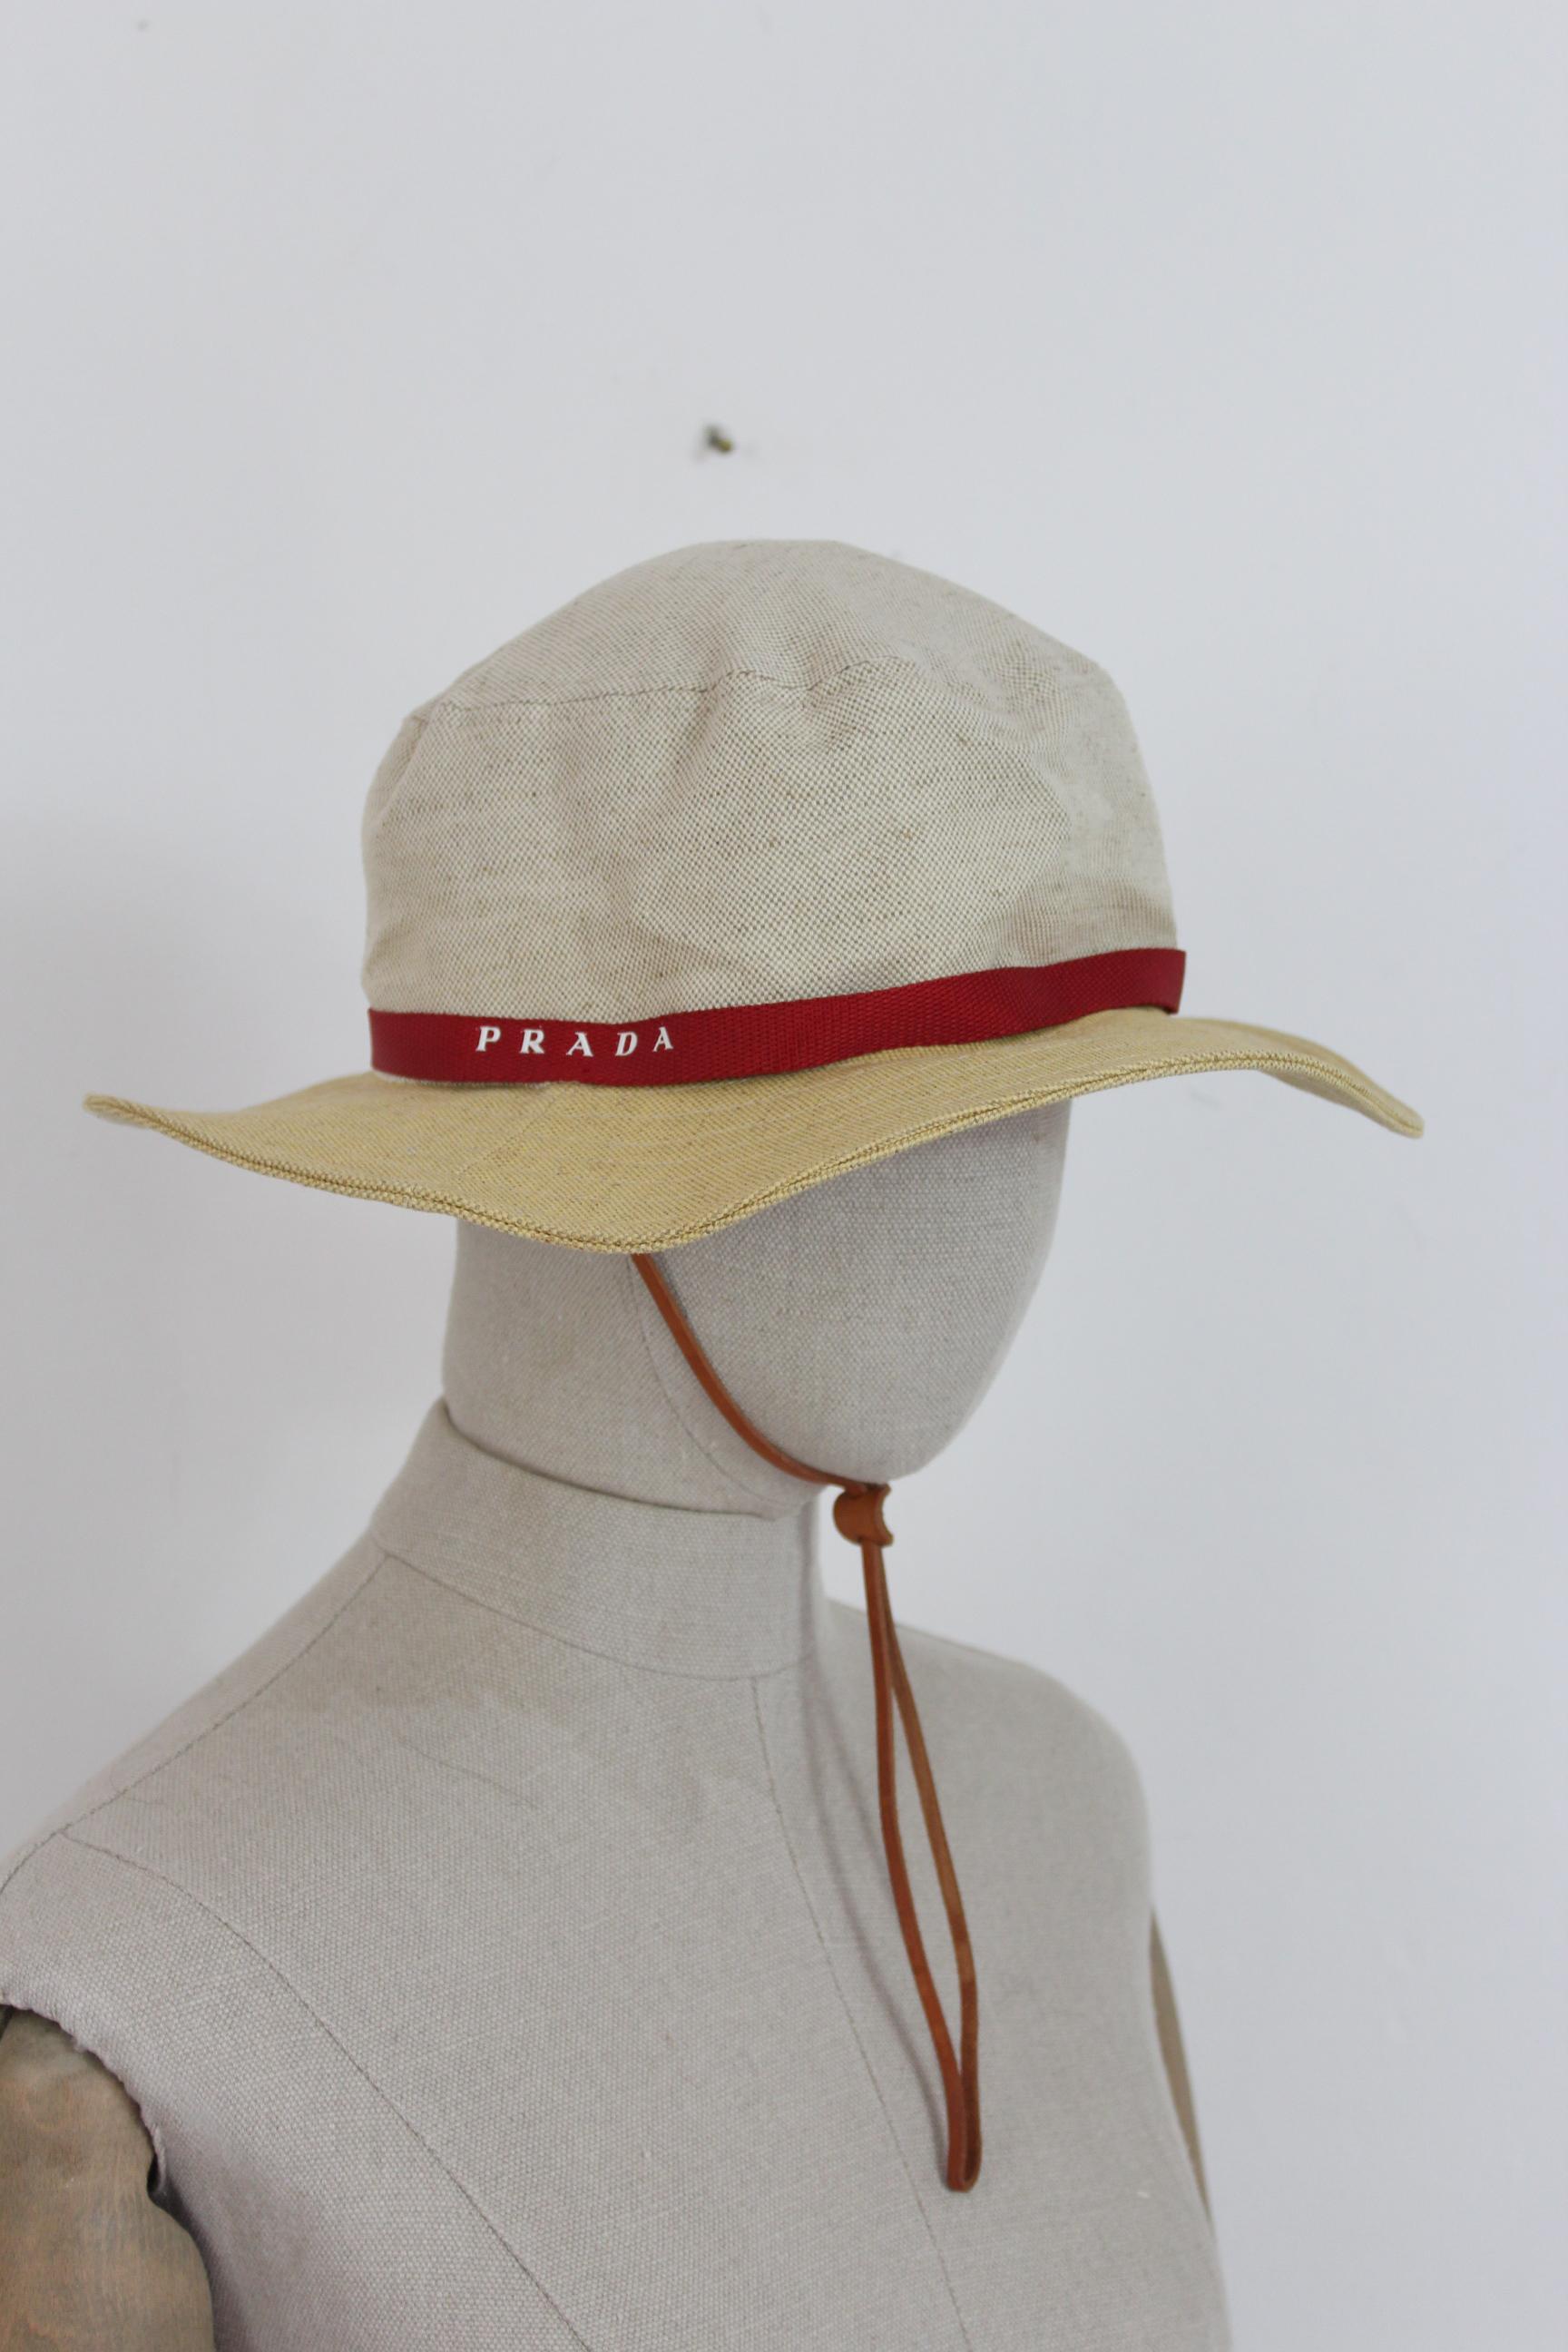 Prada vintage 90s unisex hat. Cowboy model, adjustable leather neck strap. Beige color and red details, 52% linen 48% cotton. Made in Italy. Excellent vintage conditions.

Size: L.

Diameter: 18 cm